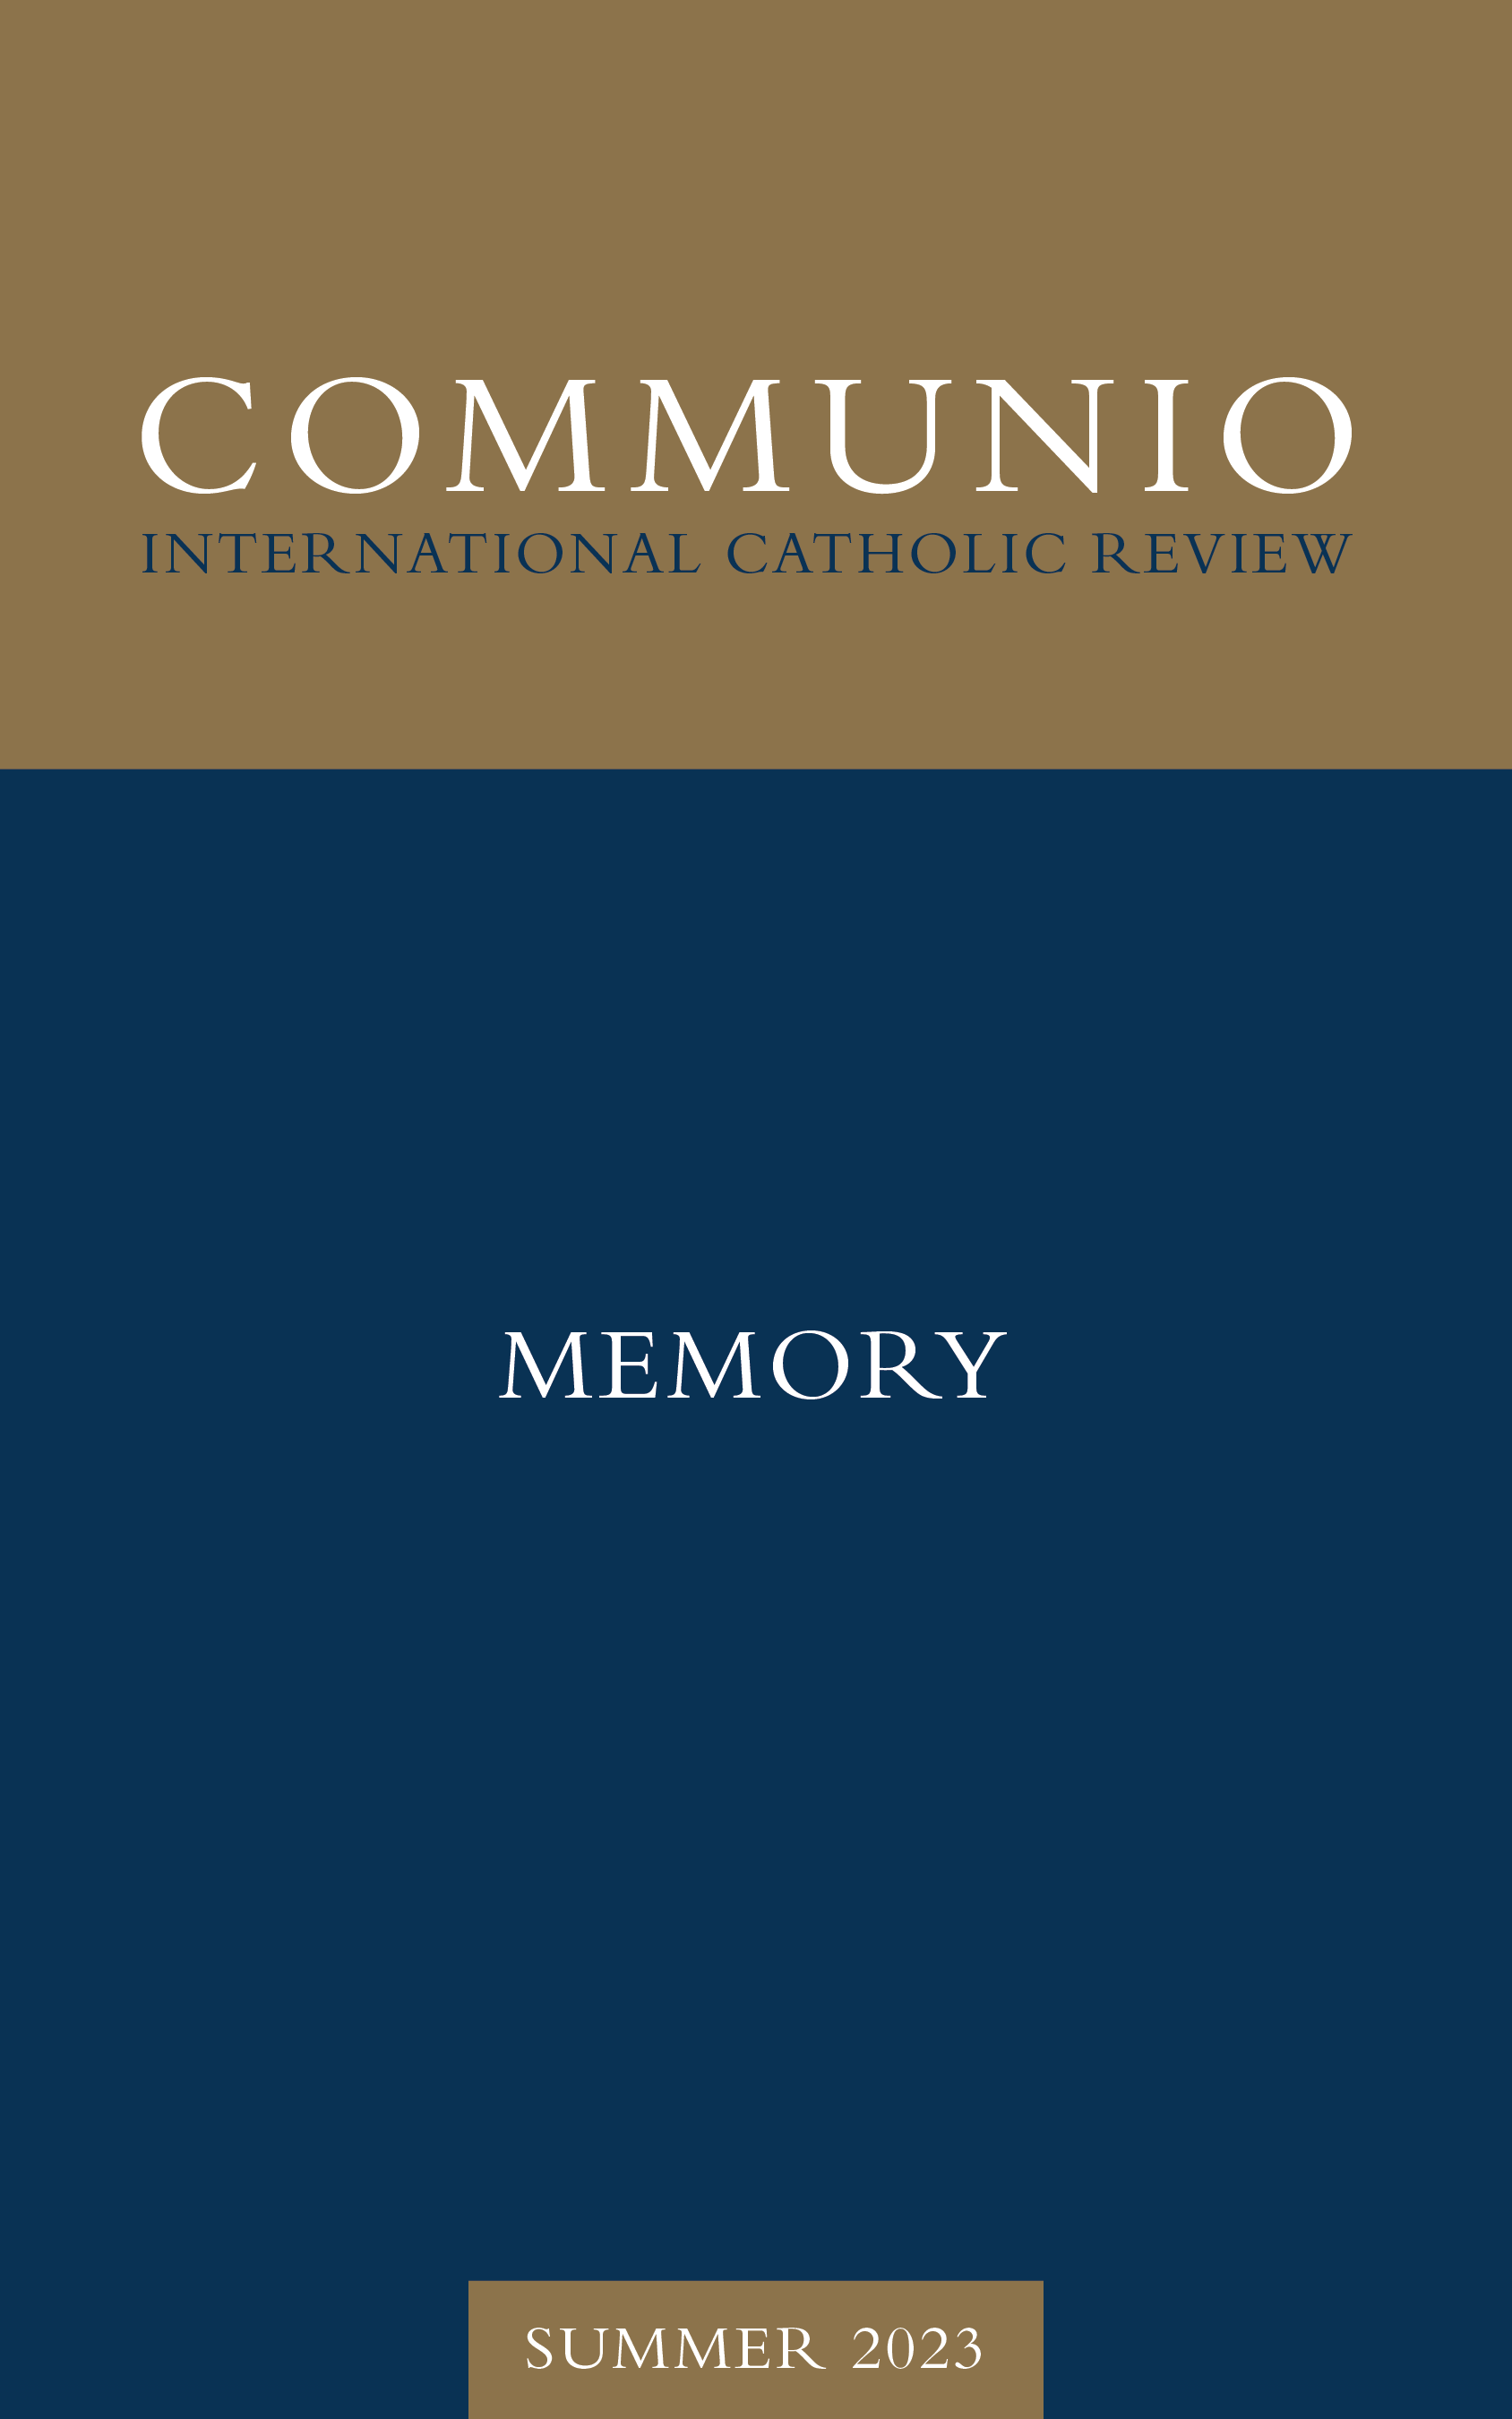 Communio - Summer 2023 - Memory